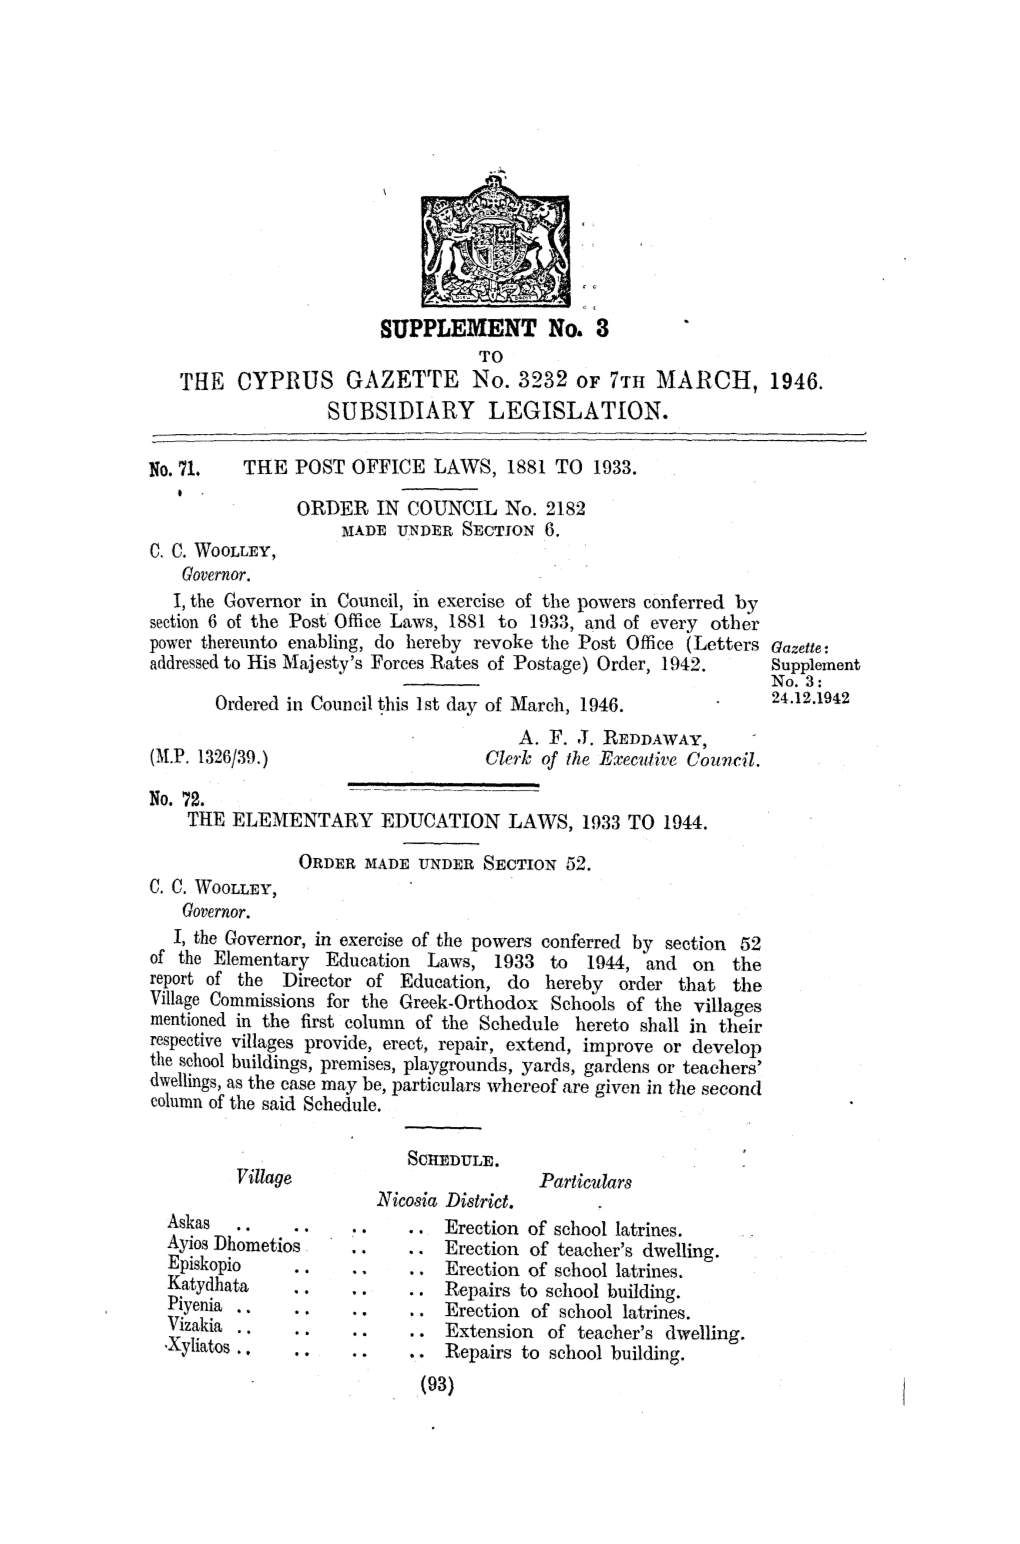 THE CYPRUS GAZETTE No. 3232 of 7TH MARCH, 1946. SUBSIDIARY LEGISLATION